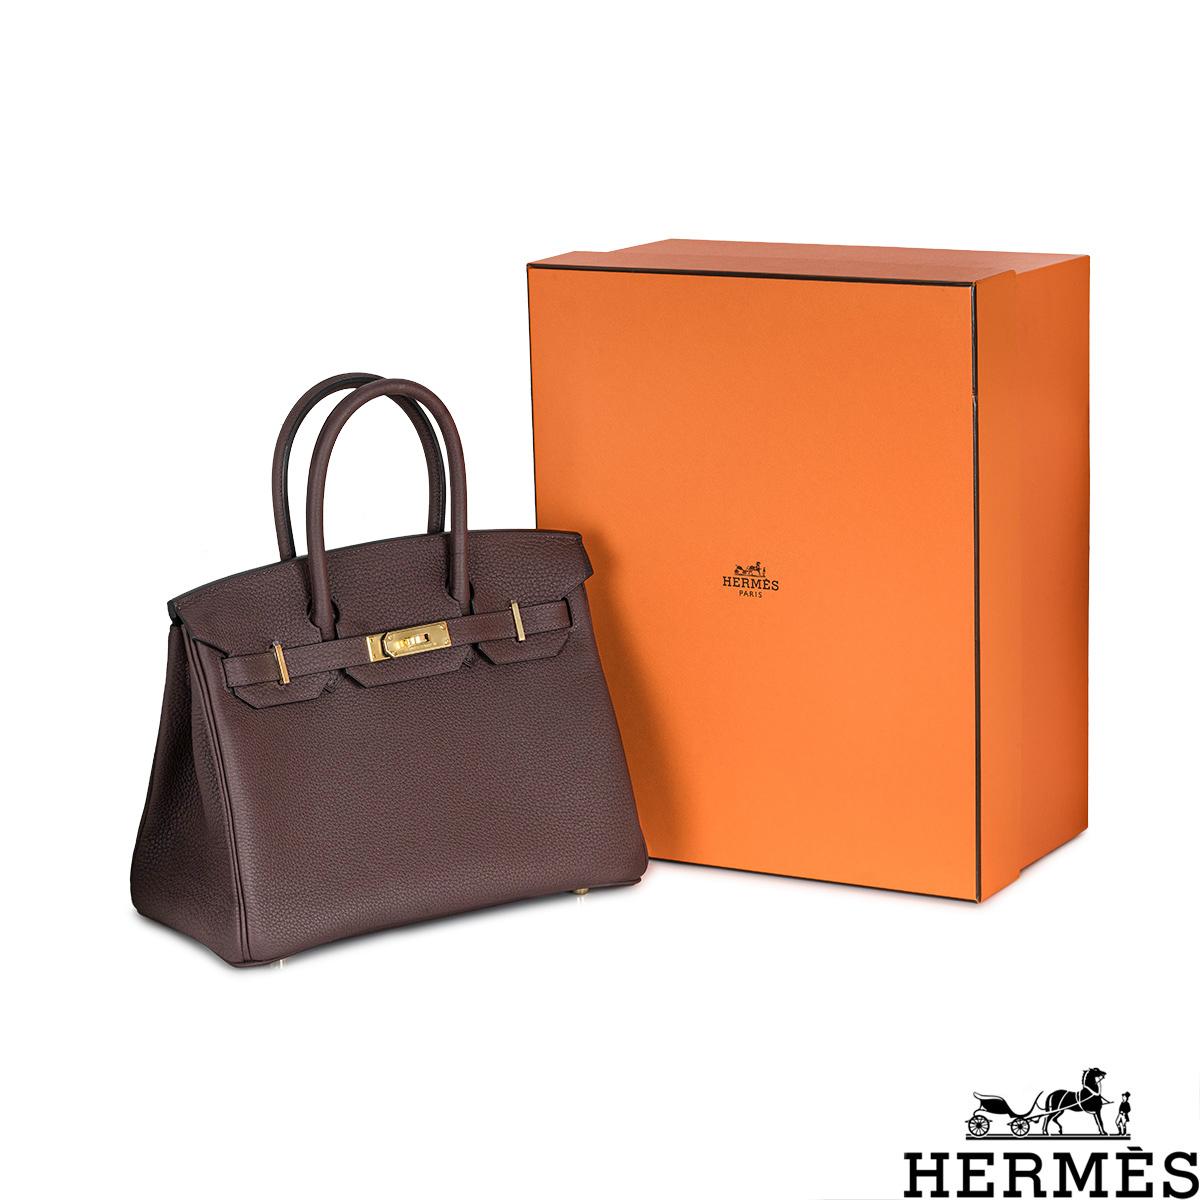 Hermès Birkin 30cm Rogue Sellier Togo GHW 6